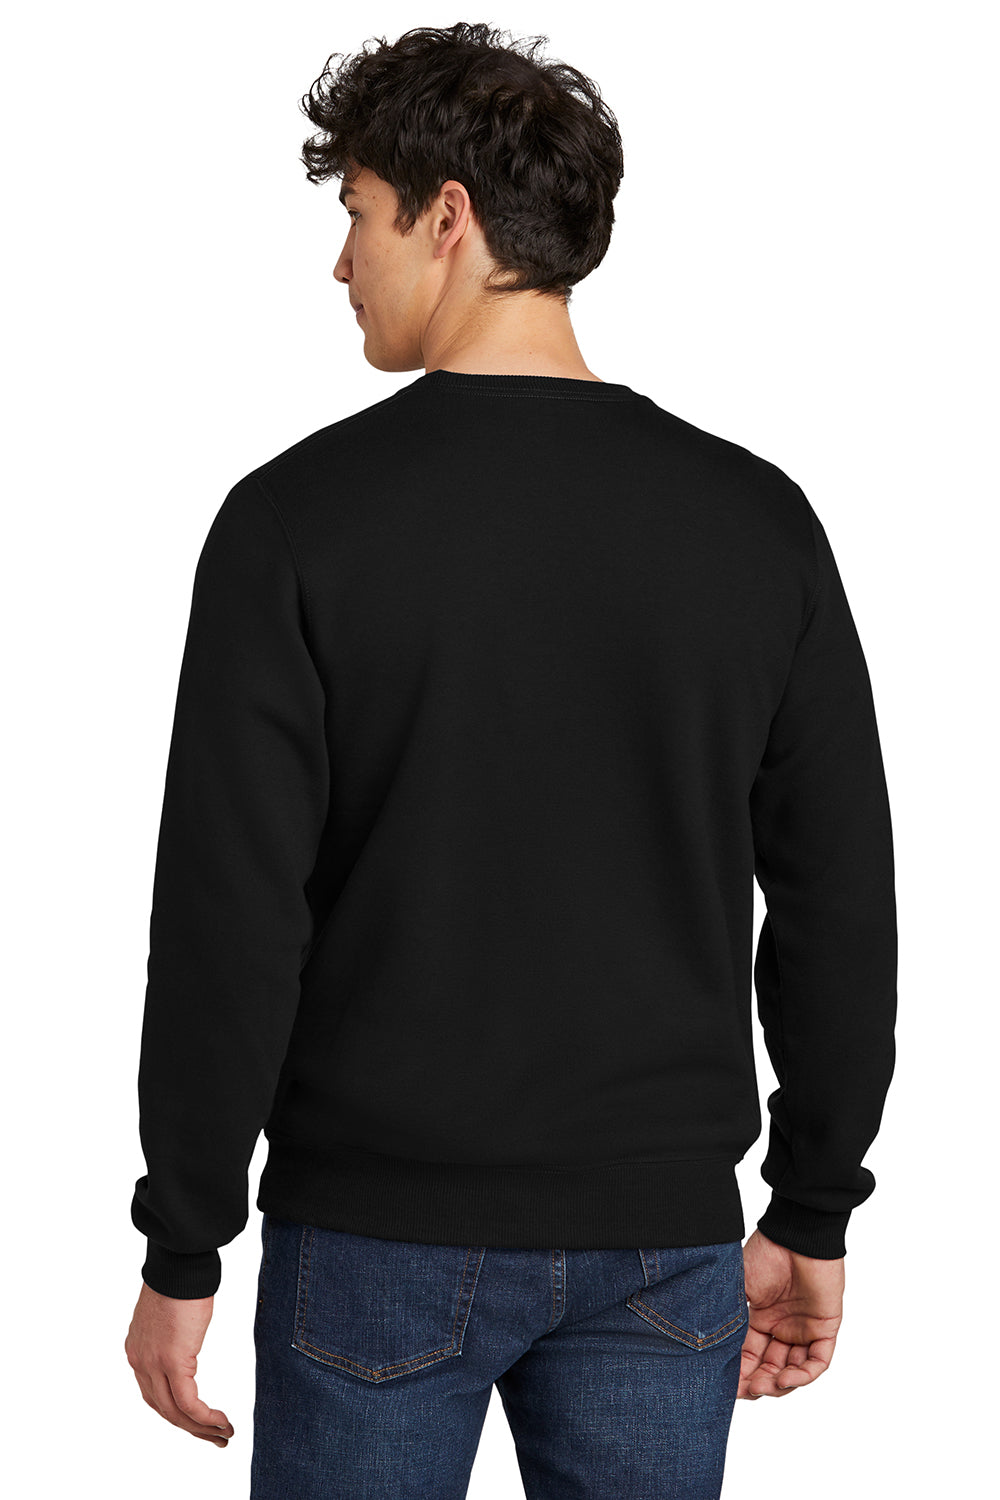 Jerzees 701M Mens Eco Premium Crewneck Sweatshirt Ink Black Back